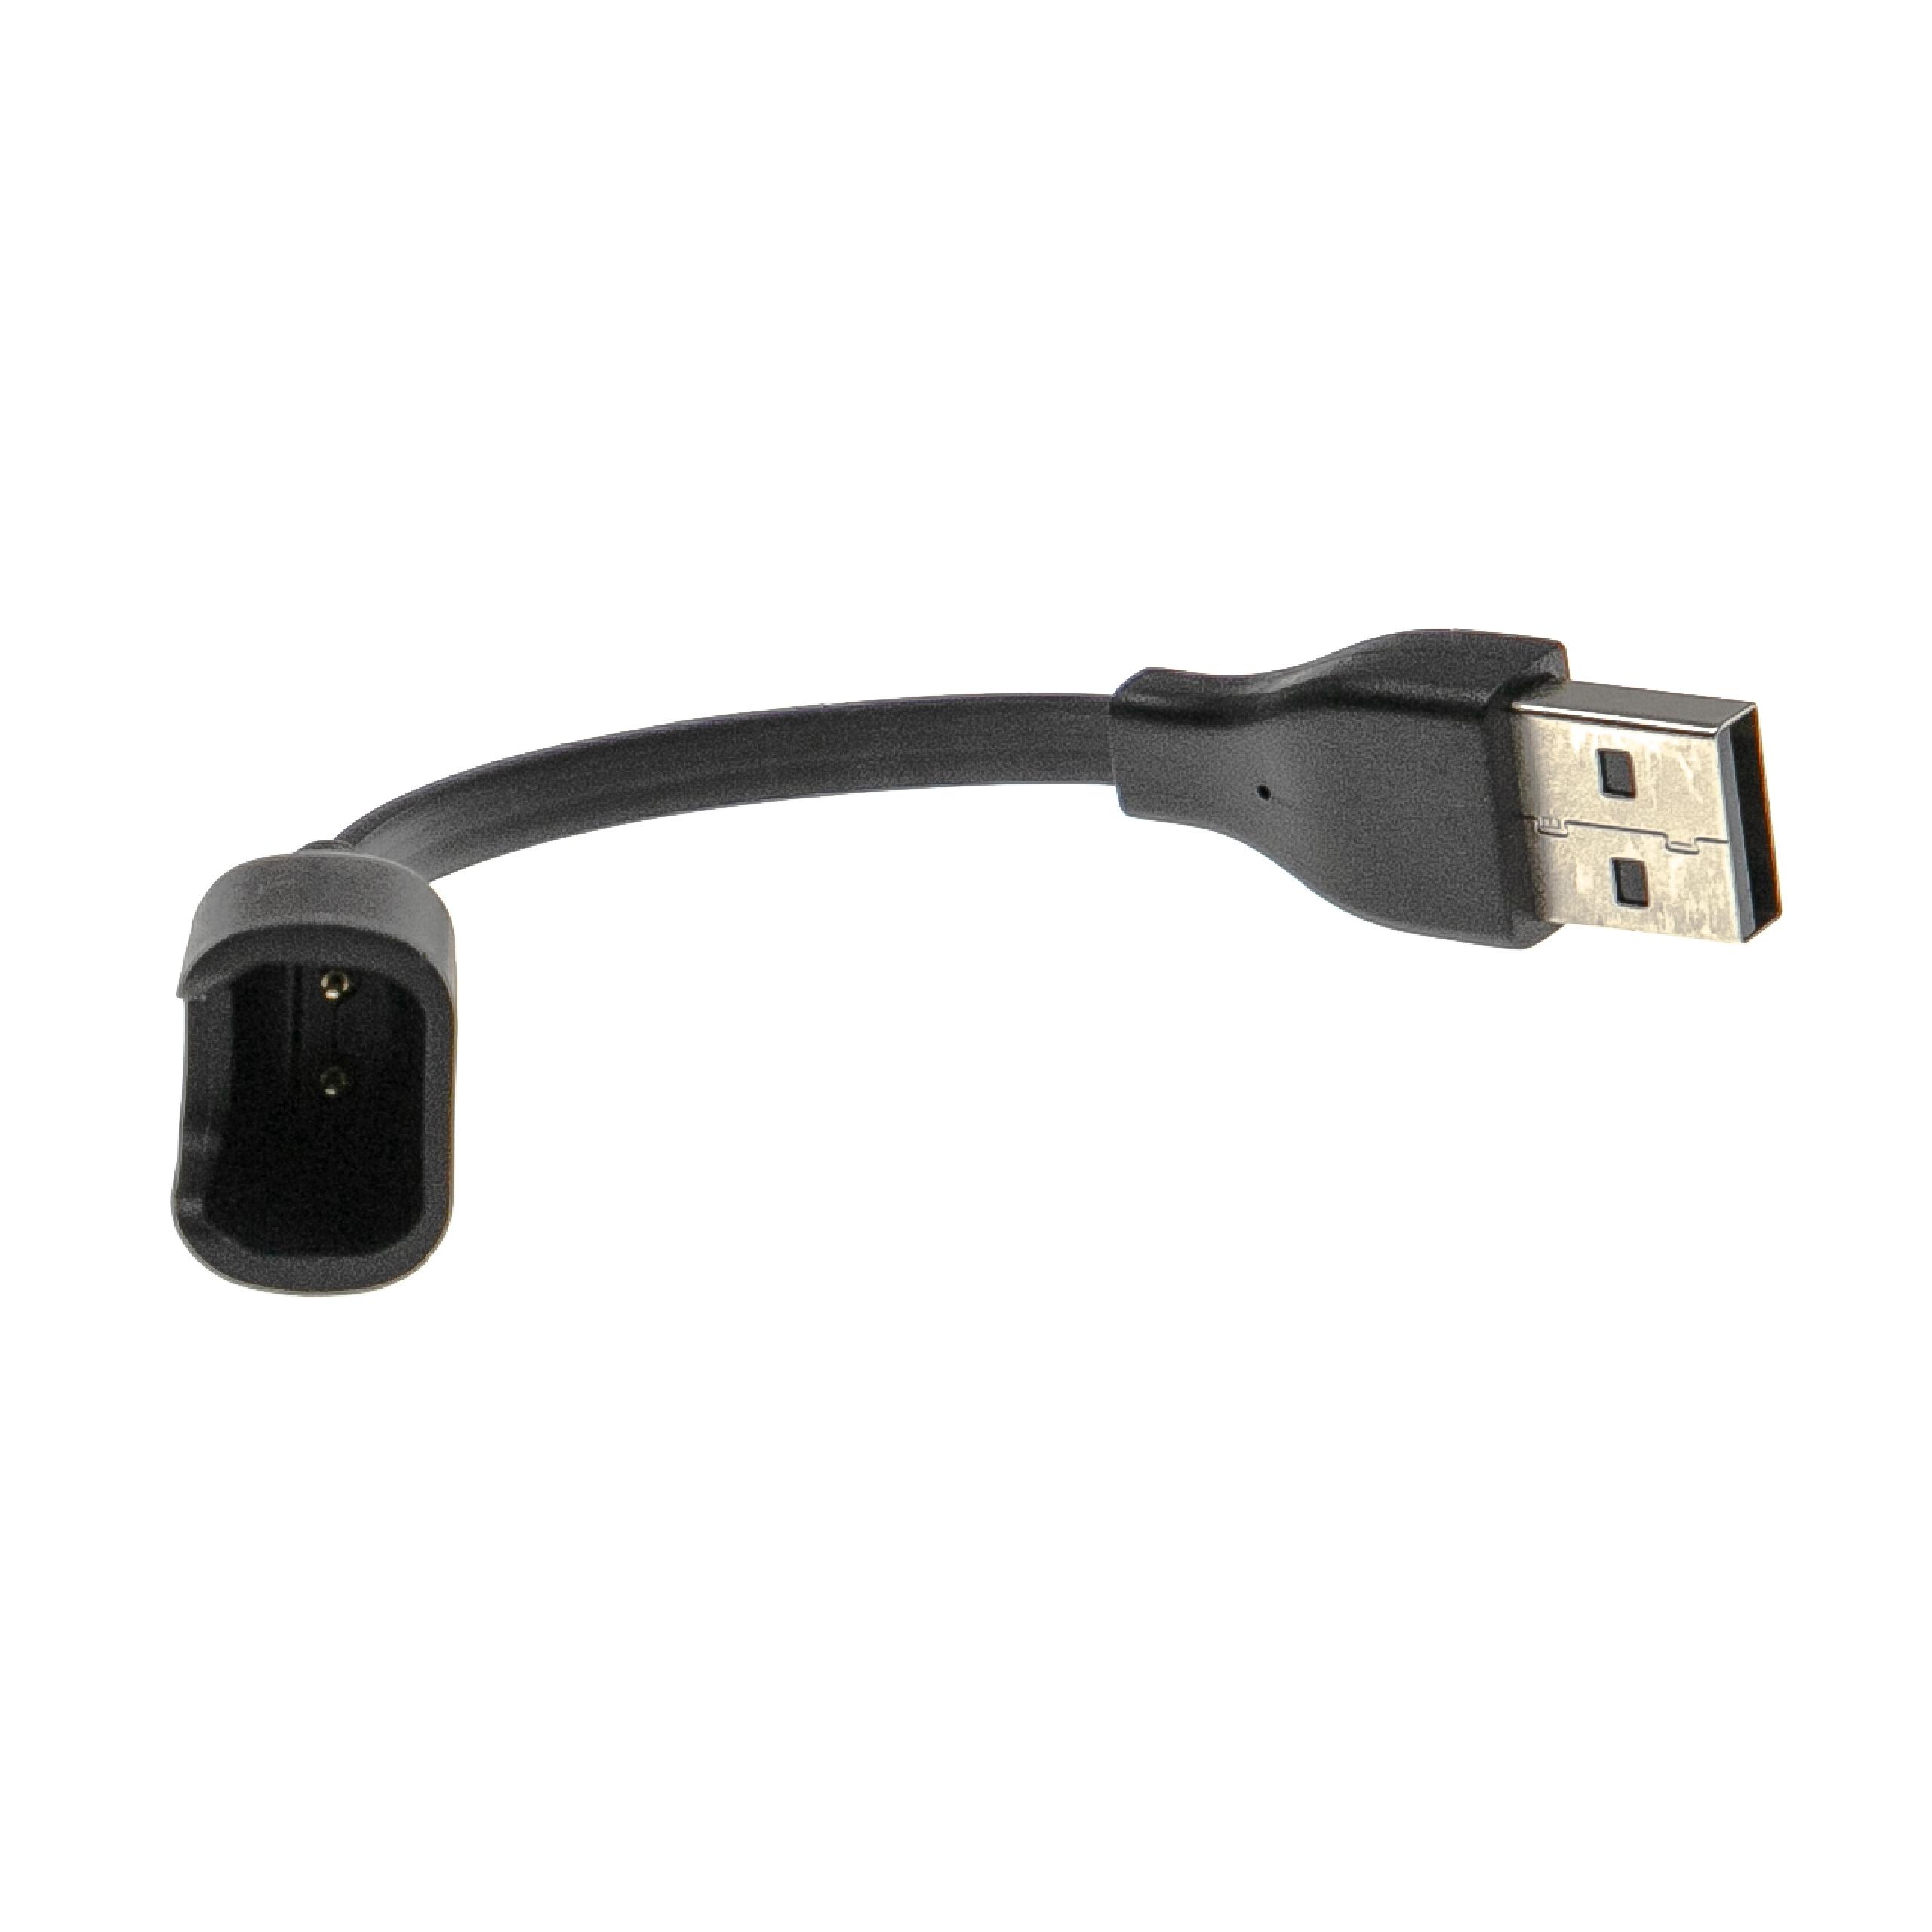 Cable de carga USB para smartwatch Huawei Honor - negro 12,5 cm